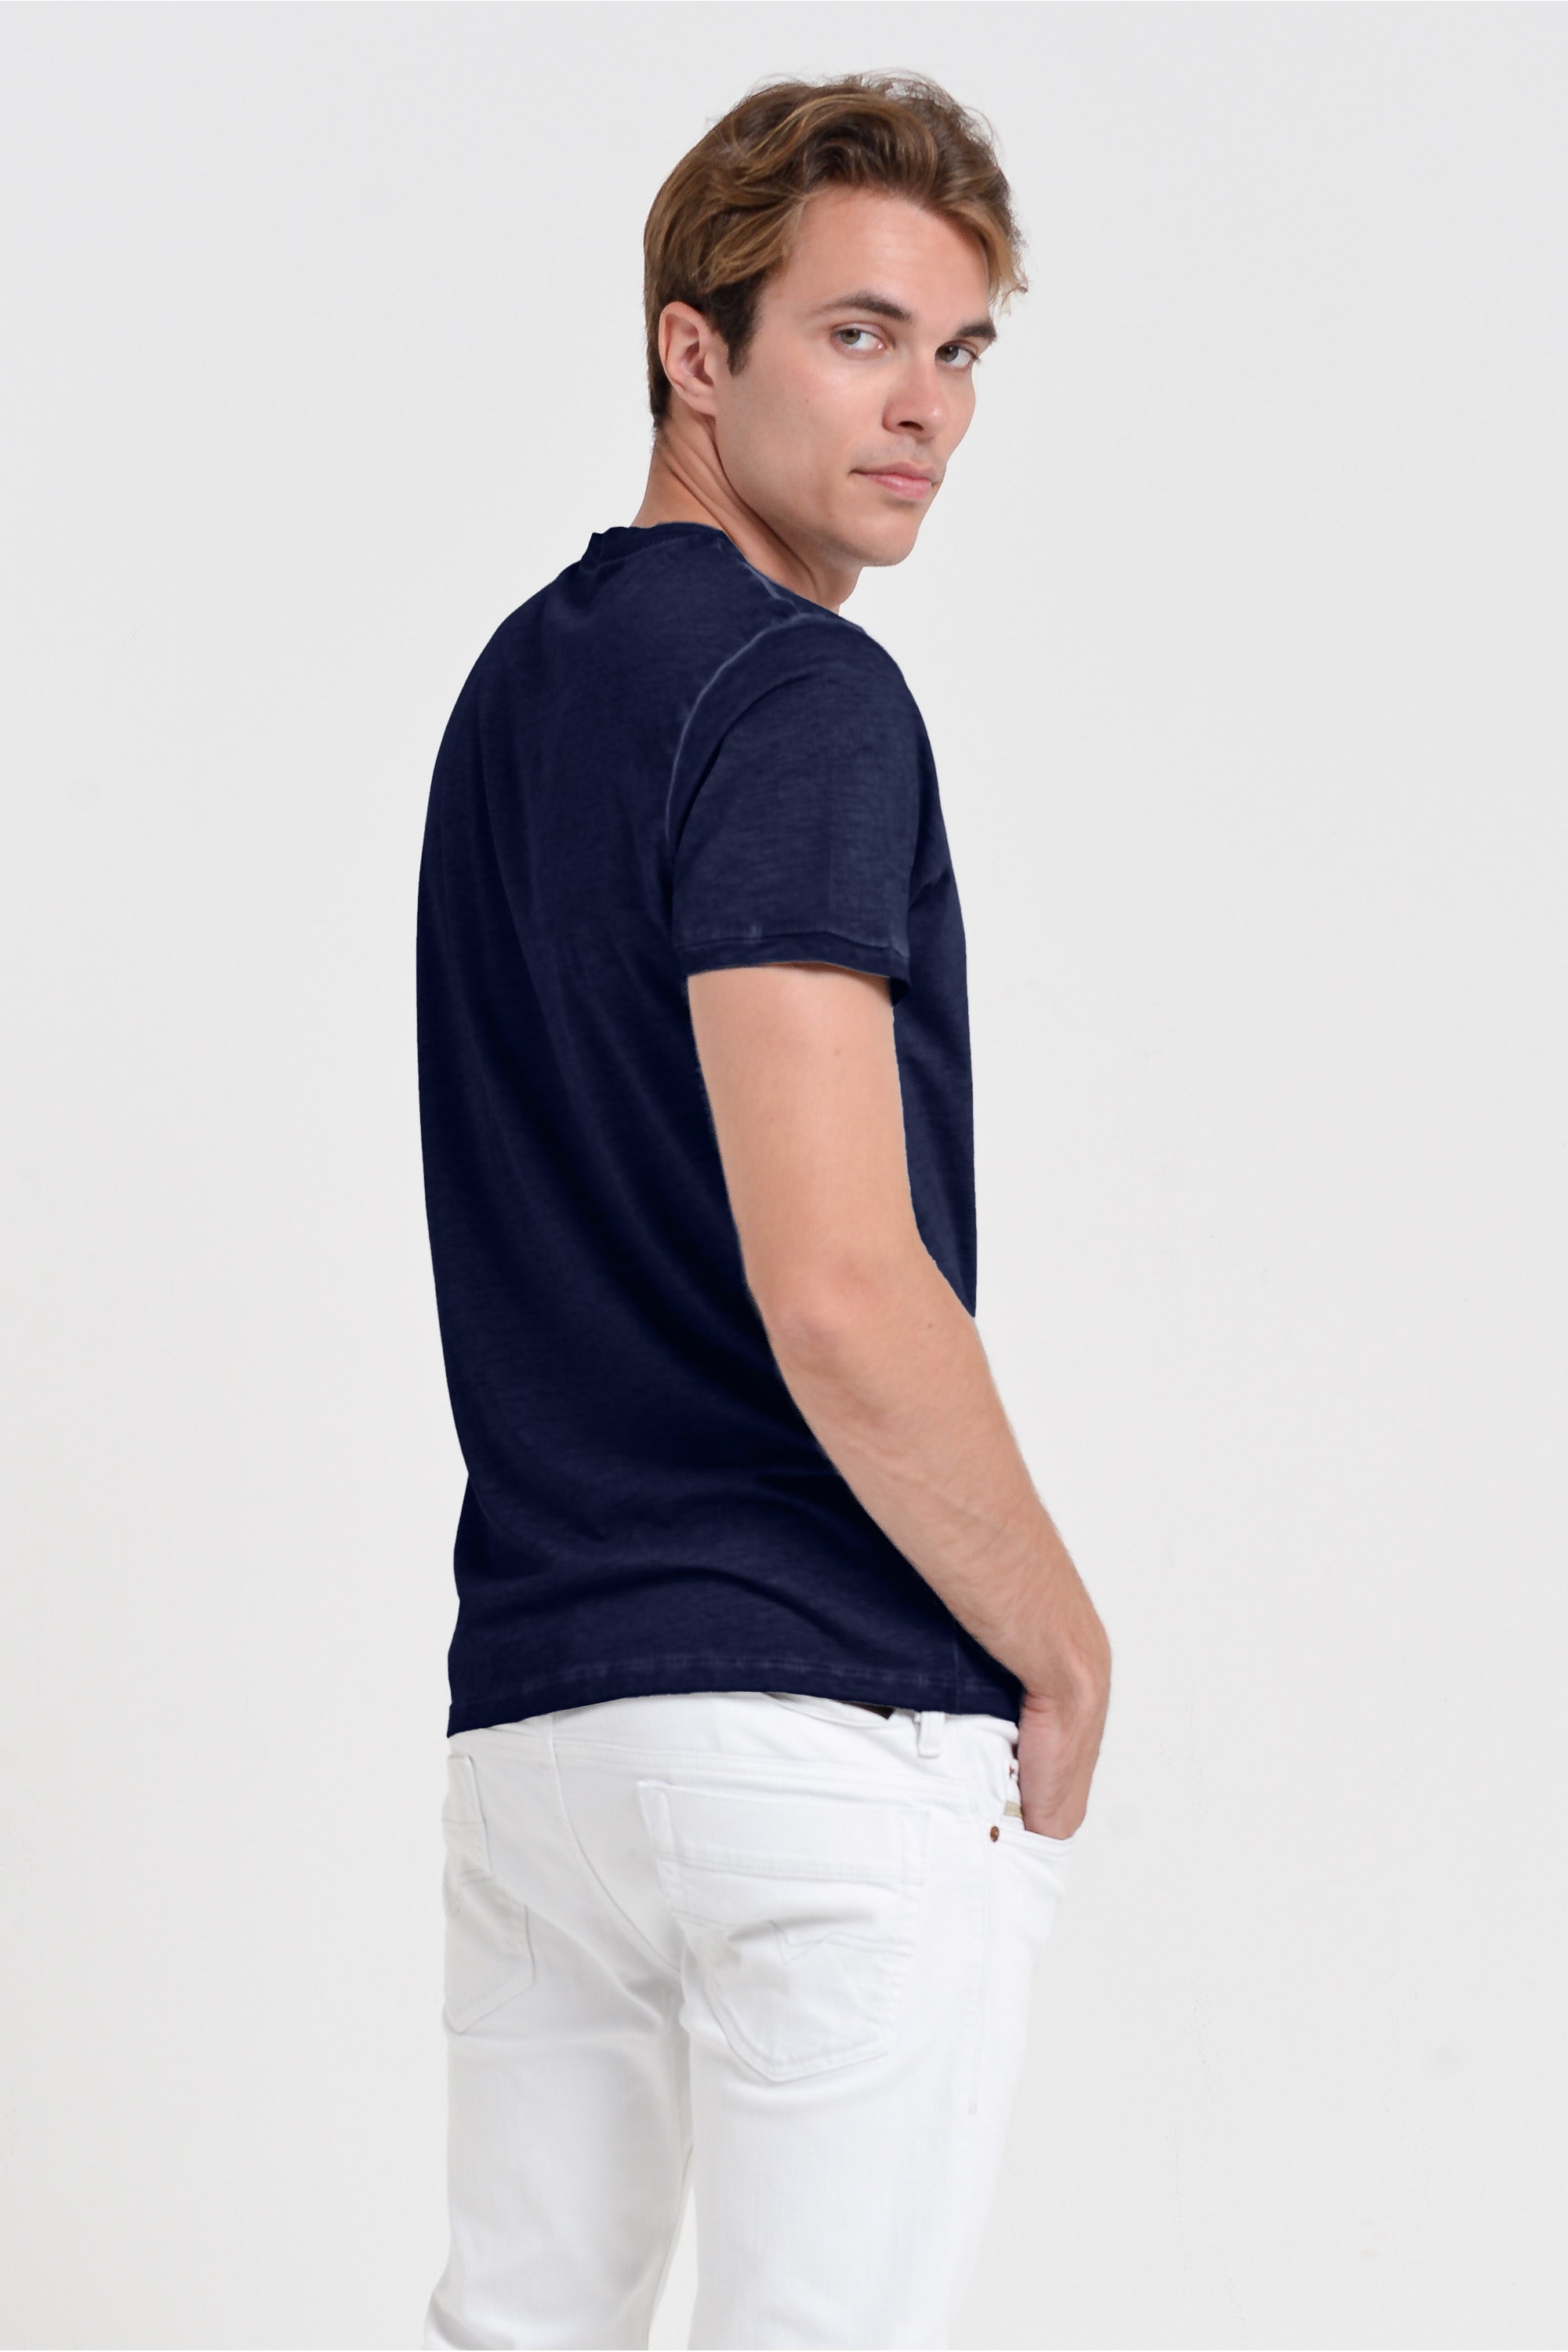 Smart Casual Cotton T-Shirt - Navy